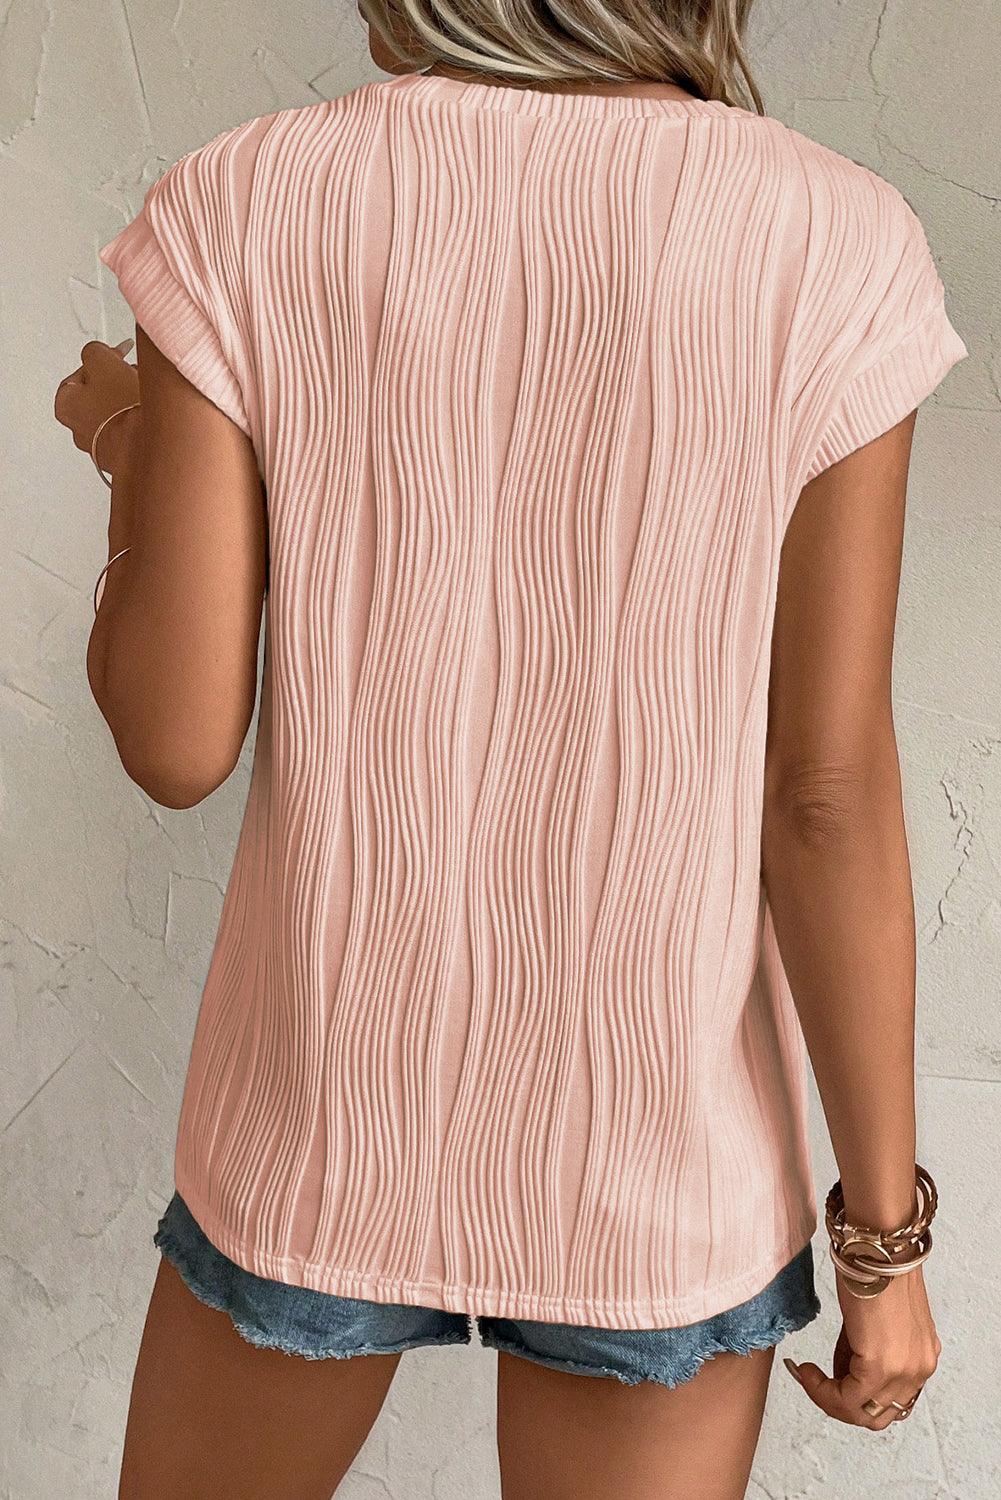 Pink Solid Color Wavy Textured Cap Sleeve Top - Ninonine